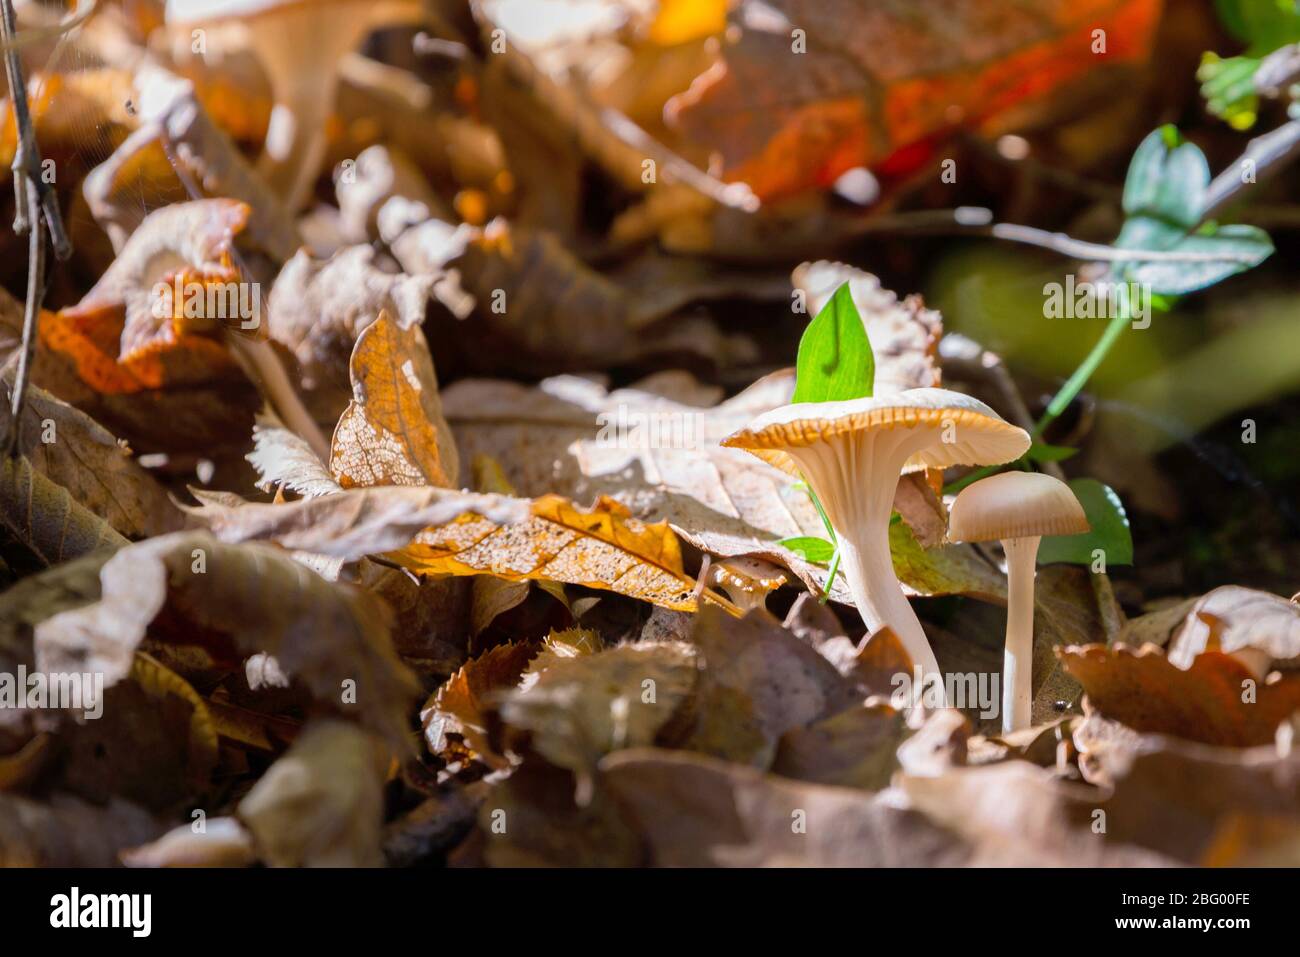 Hygrophorus agathosmus with leaves in wild forest. Stock Photo